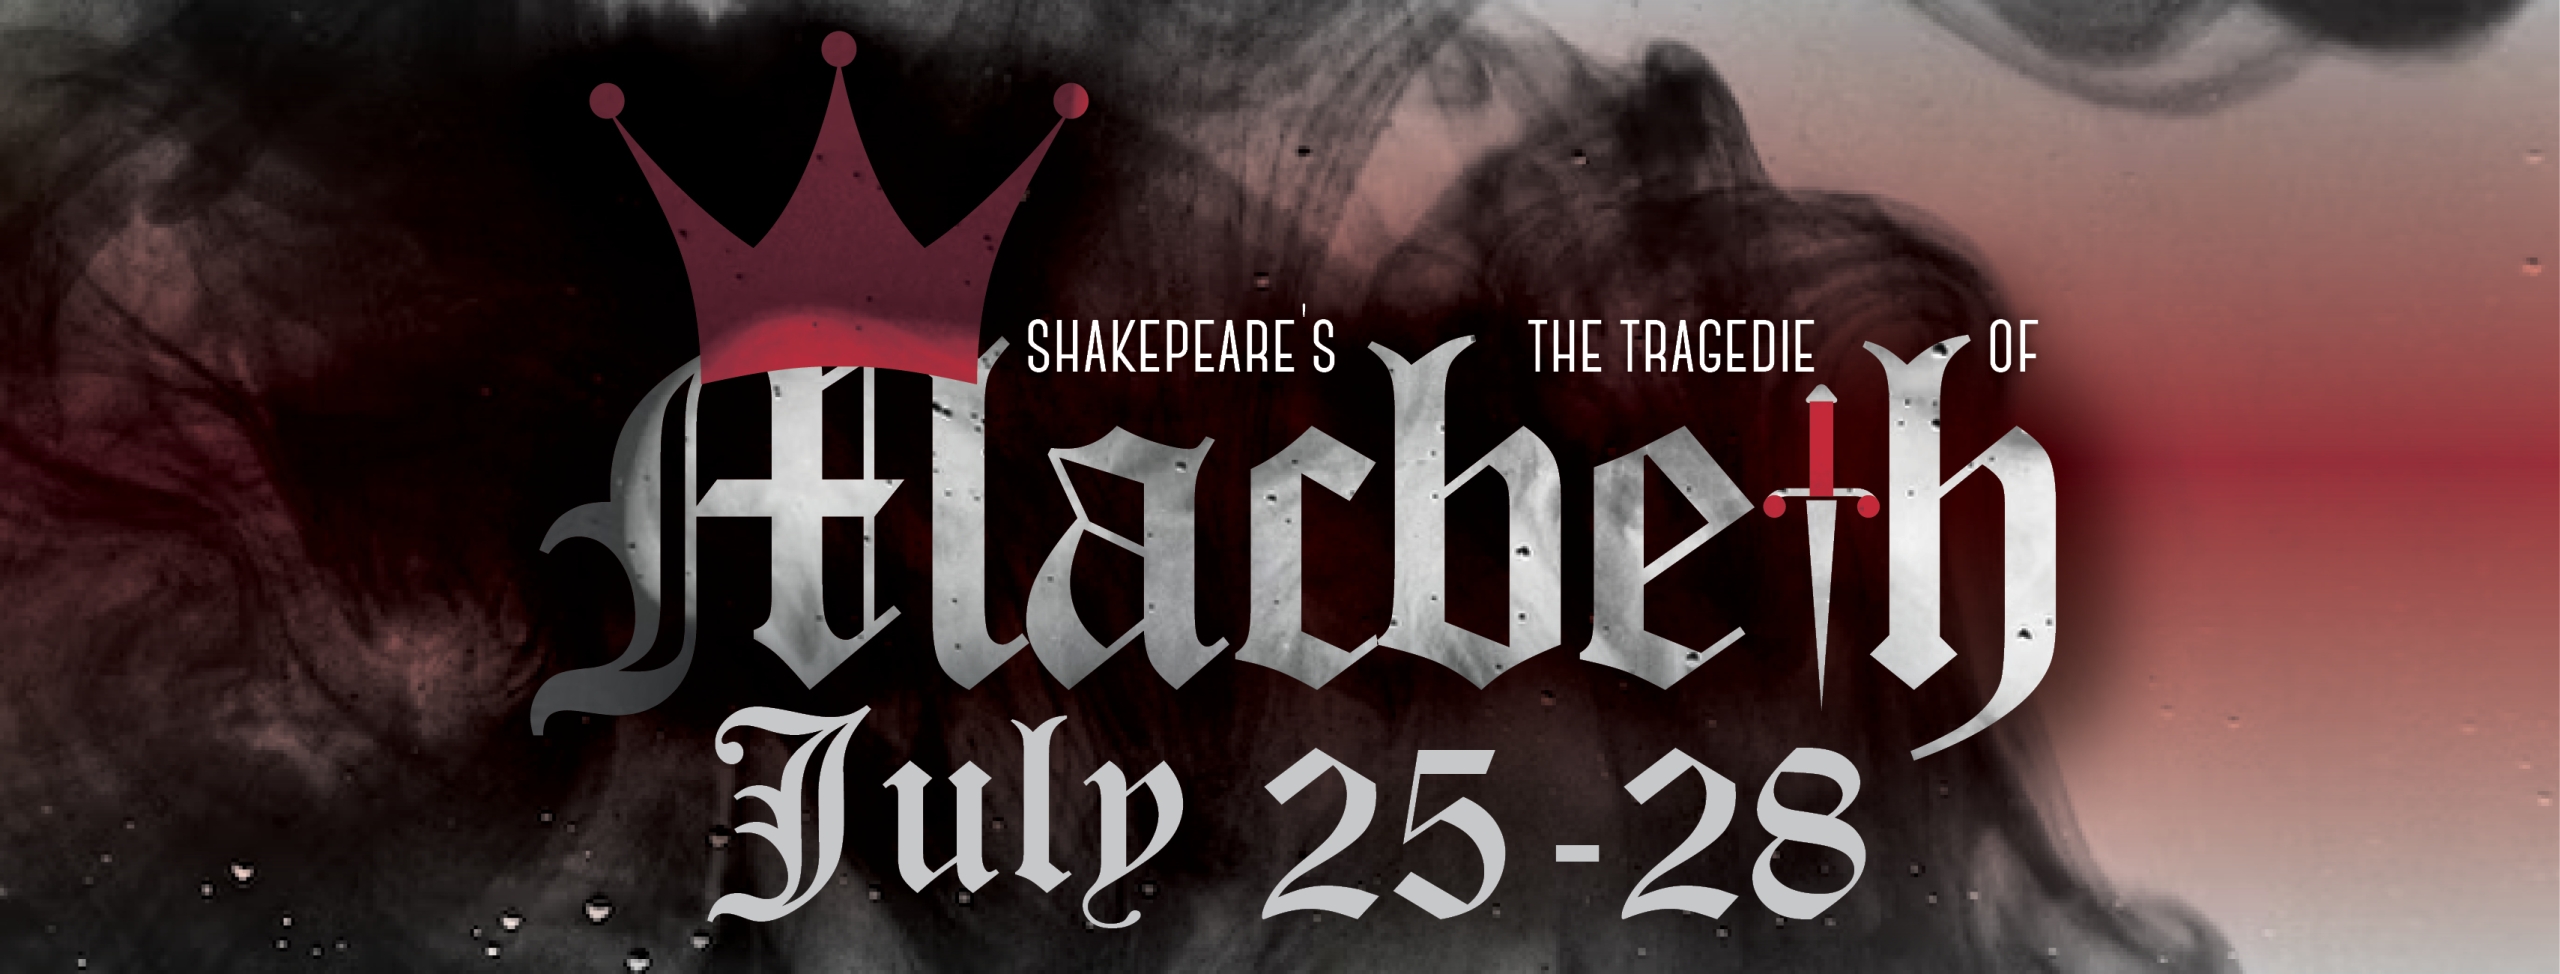 Macbeth Website Cover